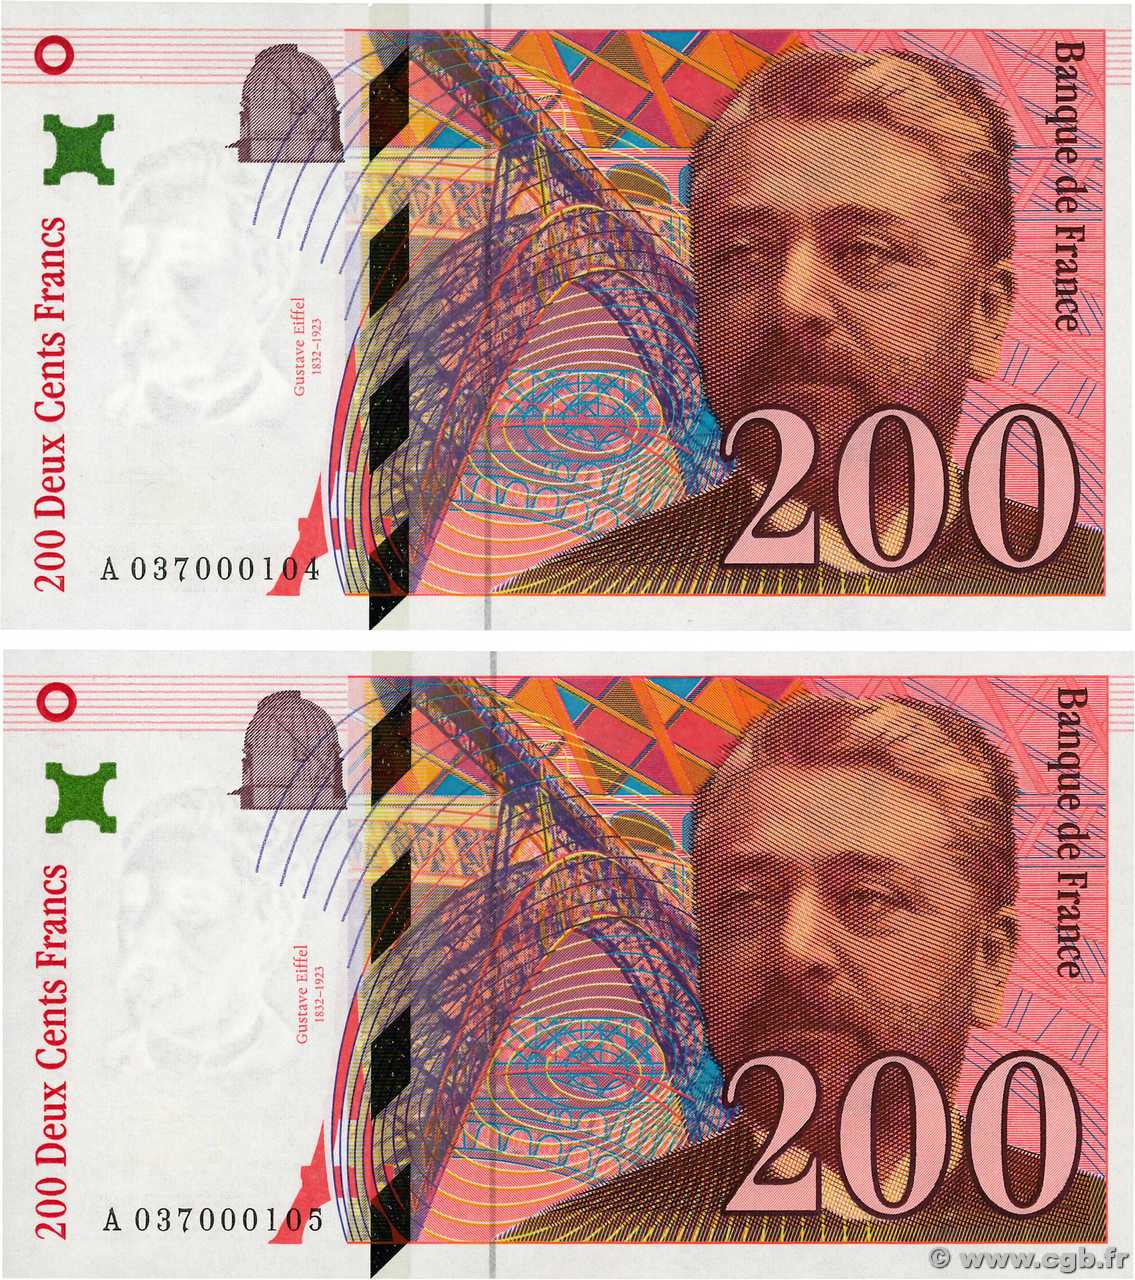 200 Francs EIFFEL Petit numéro FRANCE  1996 F.75.03A1 UNC